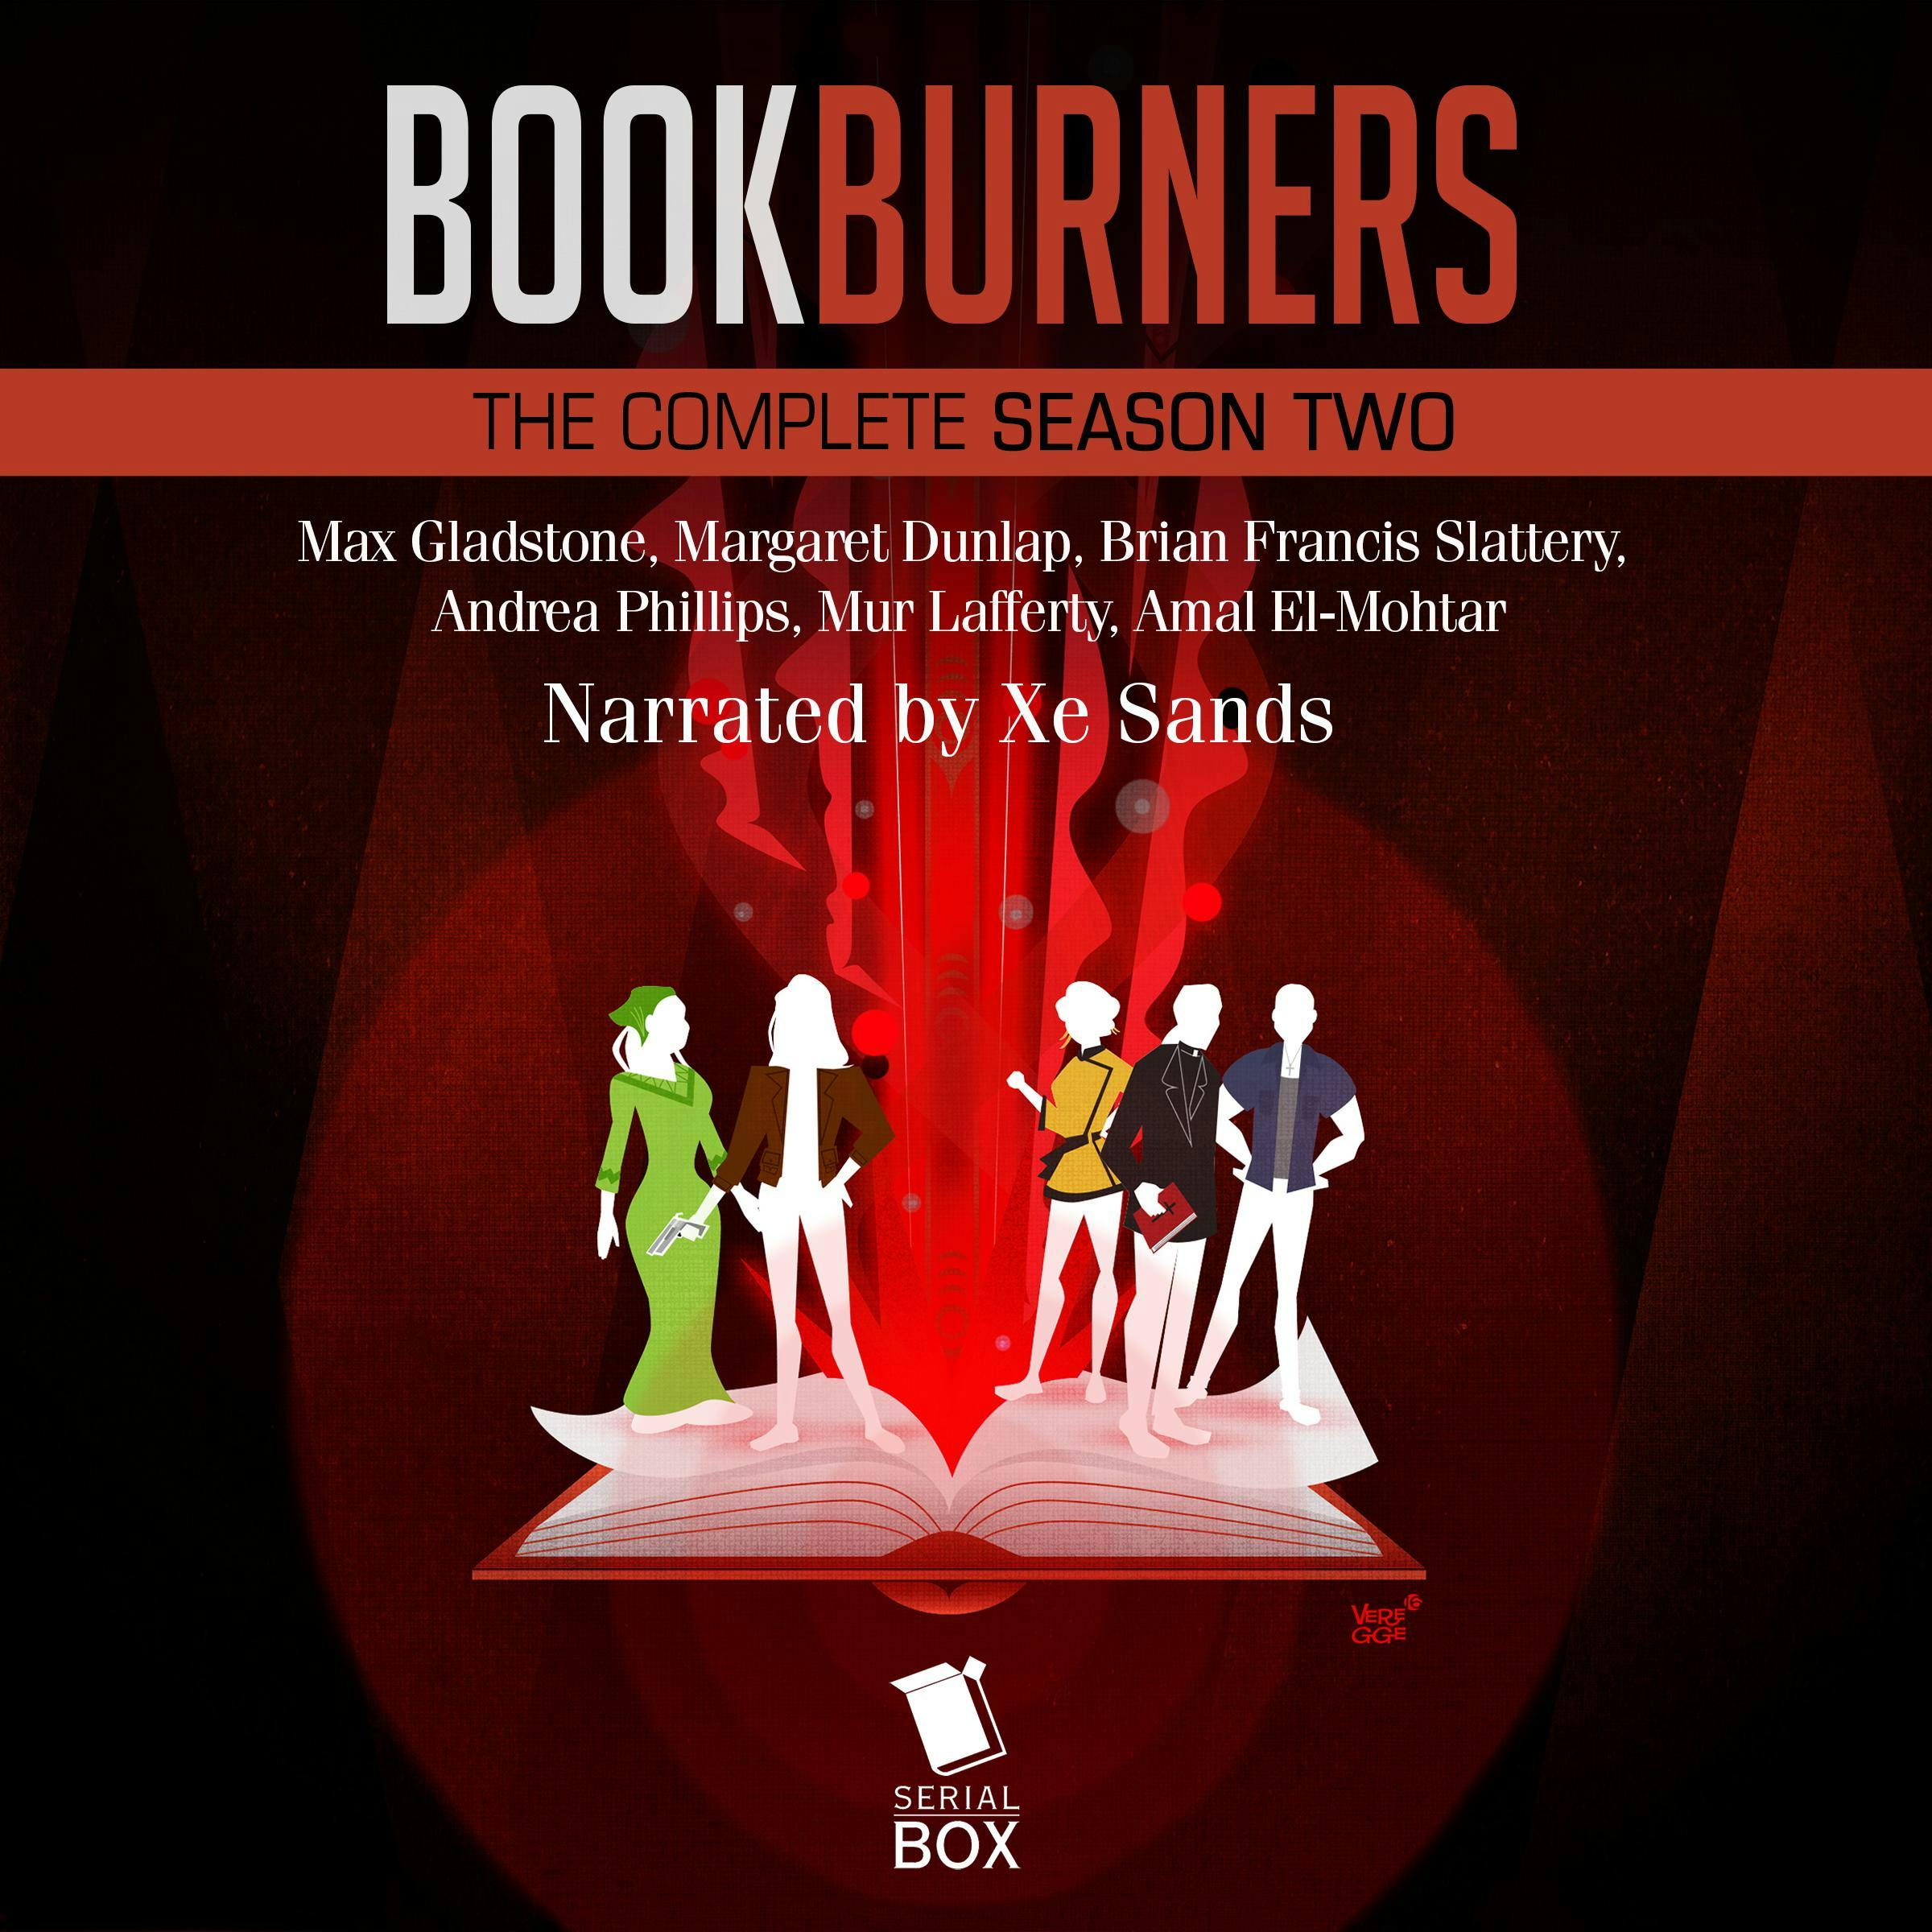 Bookburners: The Complete Season 2 - Max Gladstone, Margaret Dunlap, Amal El-Mohtar, Andrea Phillips, Brian Francis Slattery, Mur Lafferty